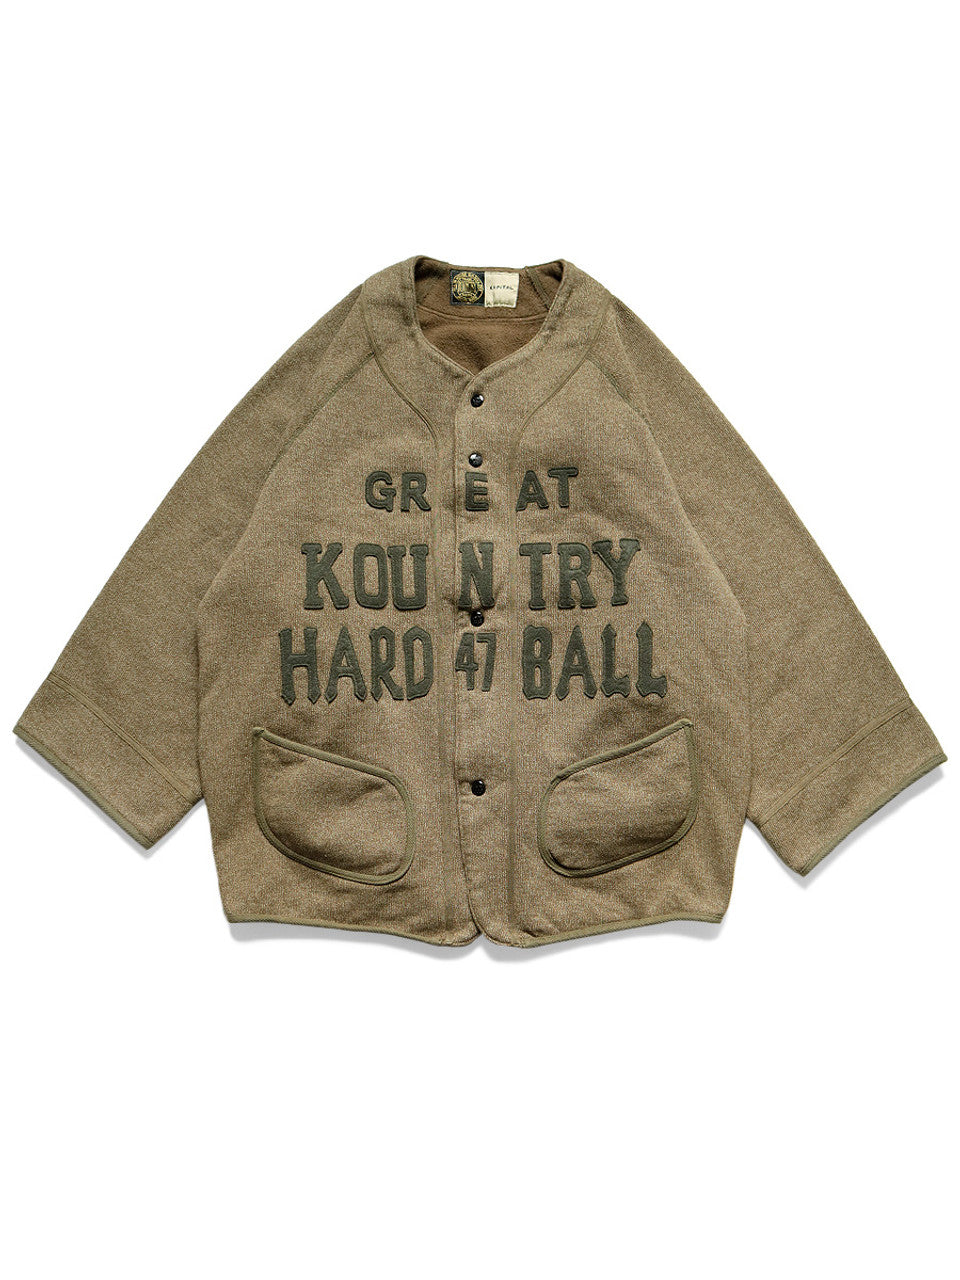 Kapital BEACH Knit Baseball Cardigan (GREAT KOUNTRY) - KHAKI